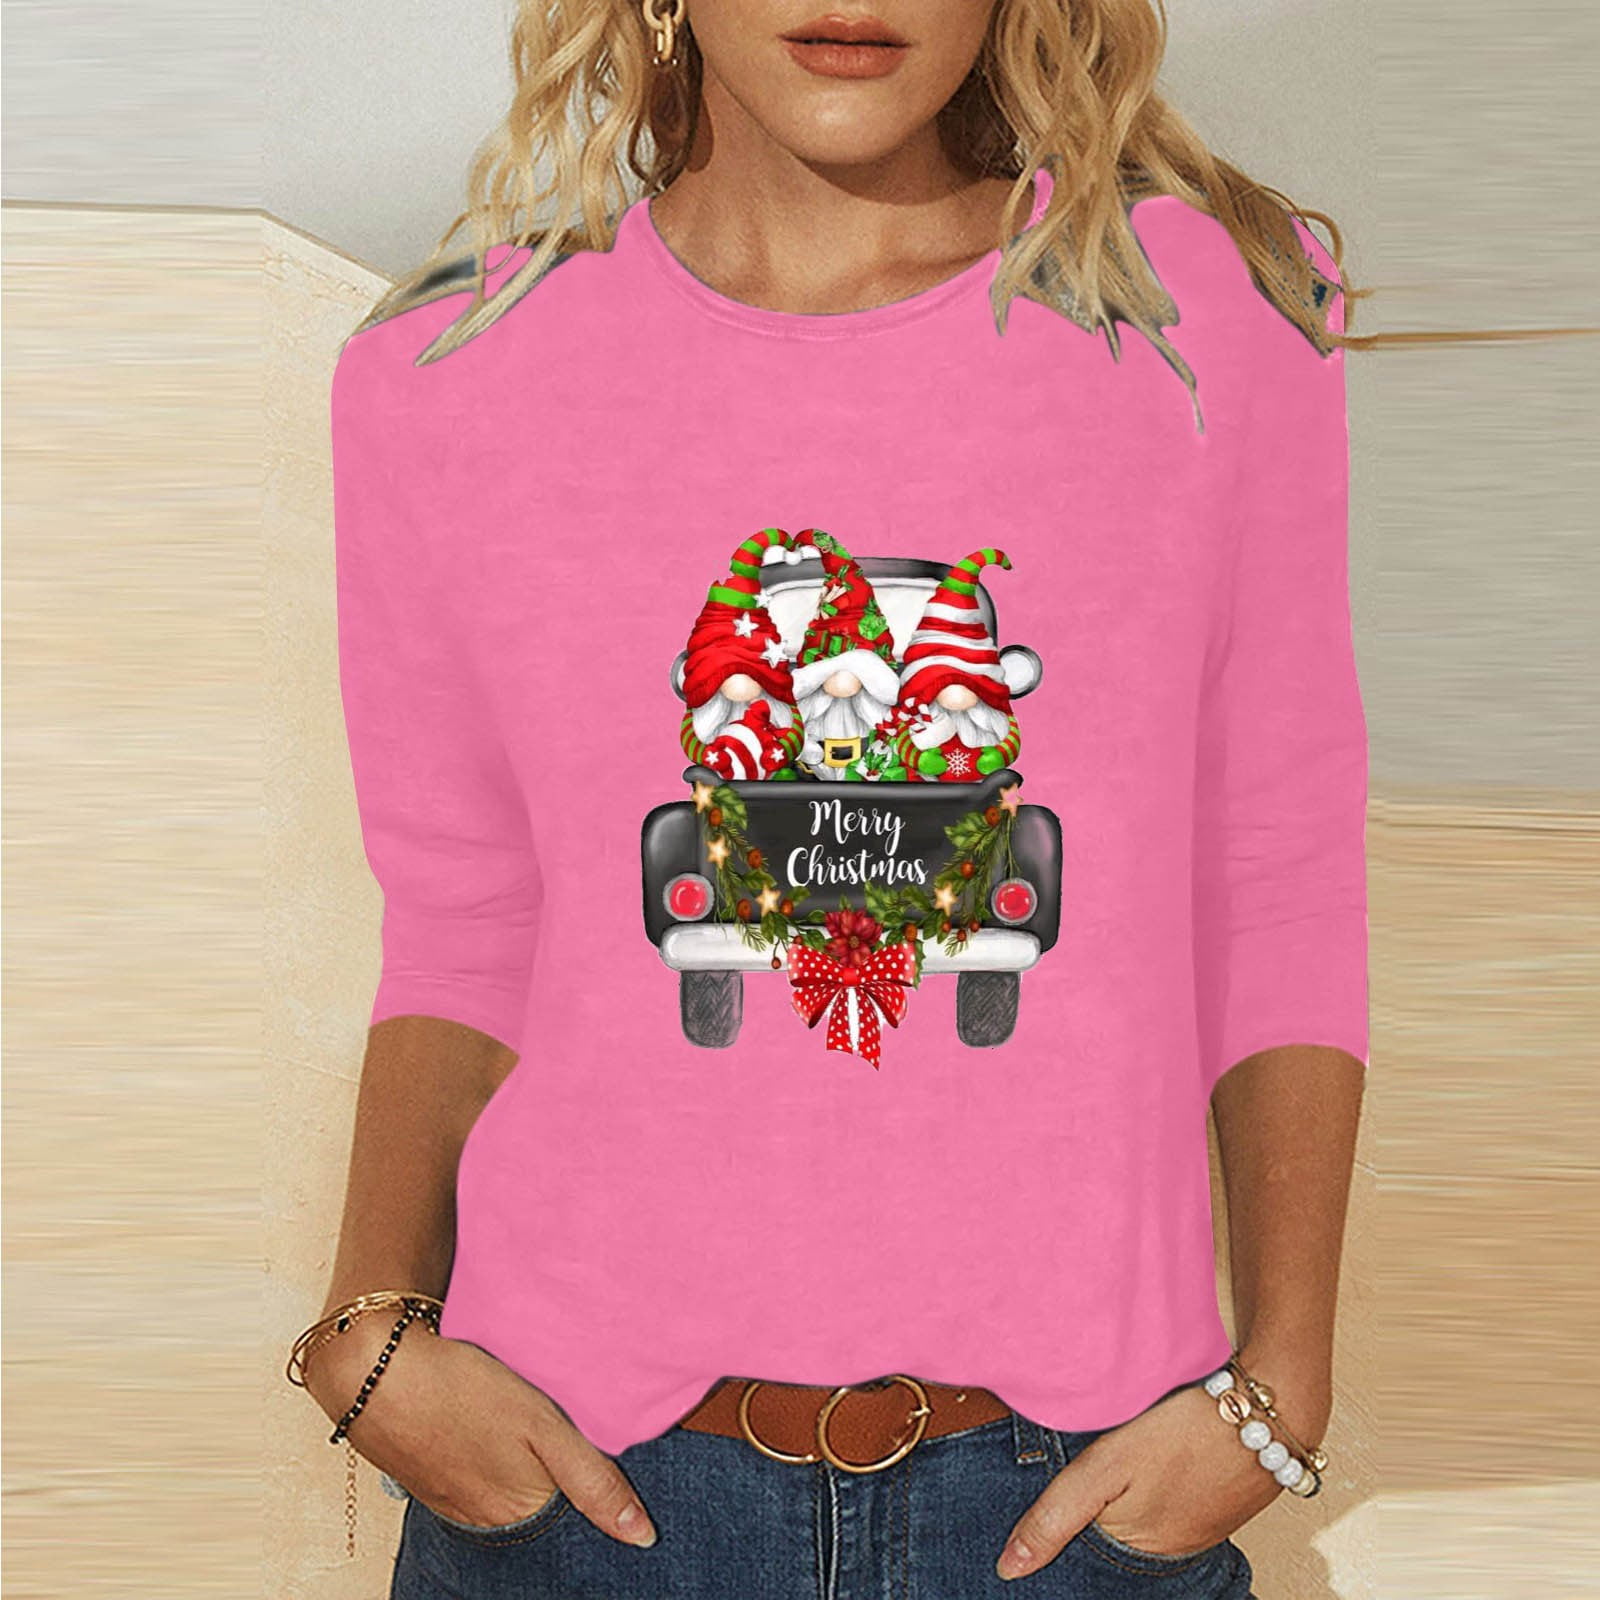 Trendvibe365 Christmas Shirts For Women Dressy Pink Gnomes Xmas Tshirts Crew Neck Holiday